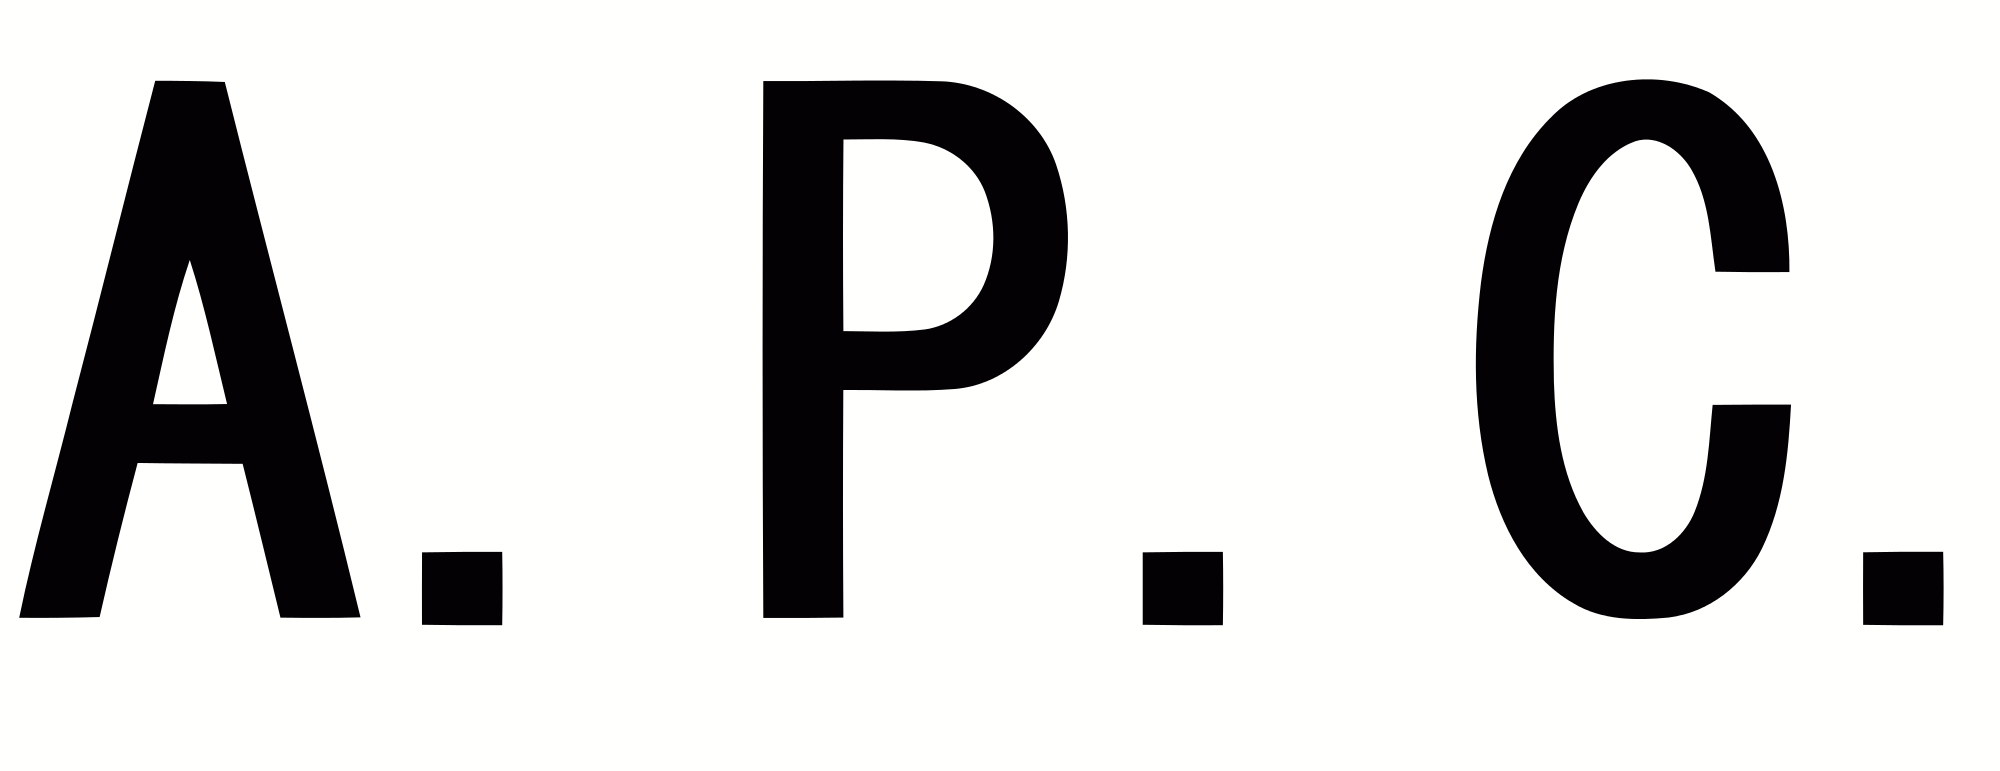 A.P.c. Logo - File:A.P.C. logo.svg - Wikimedia Commons